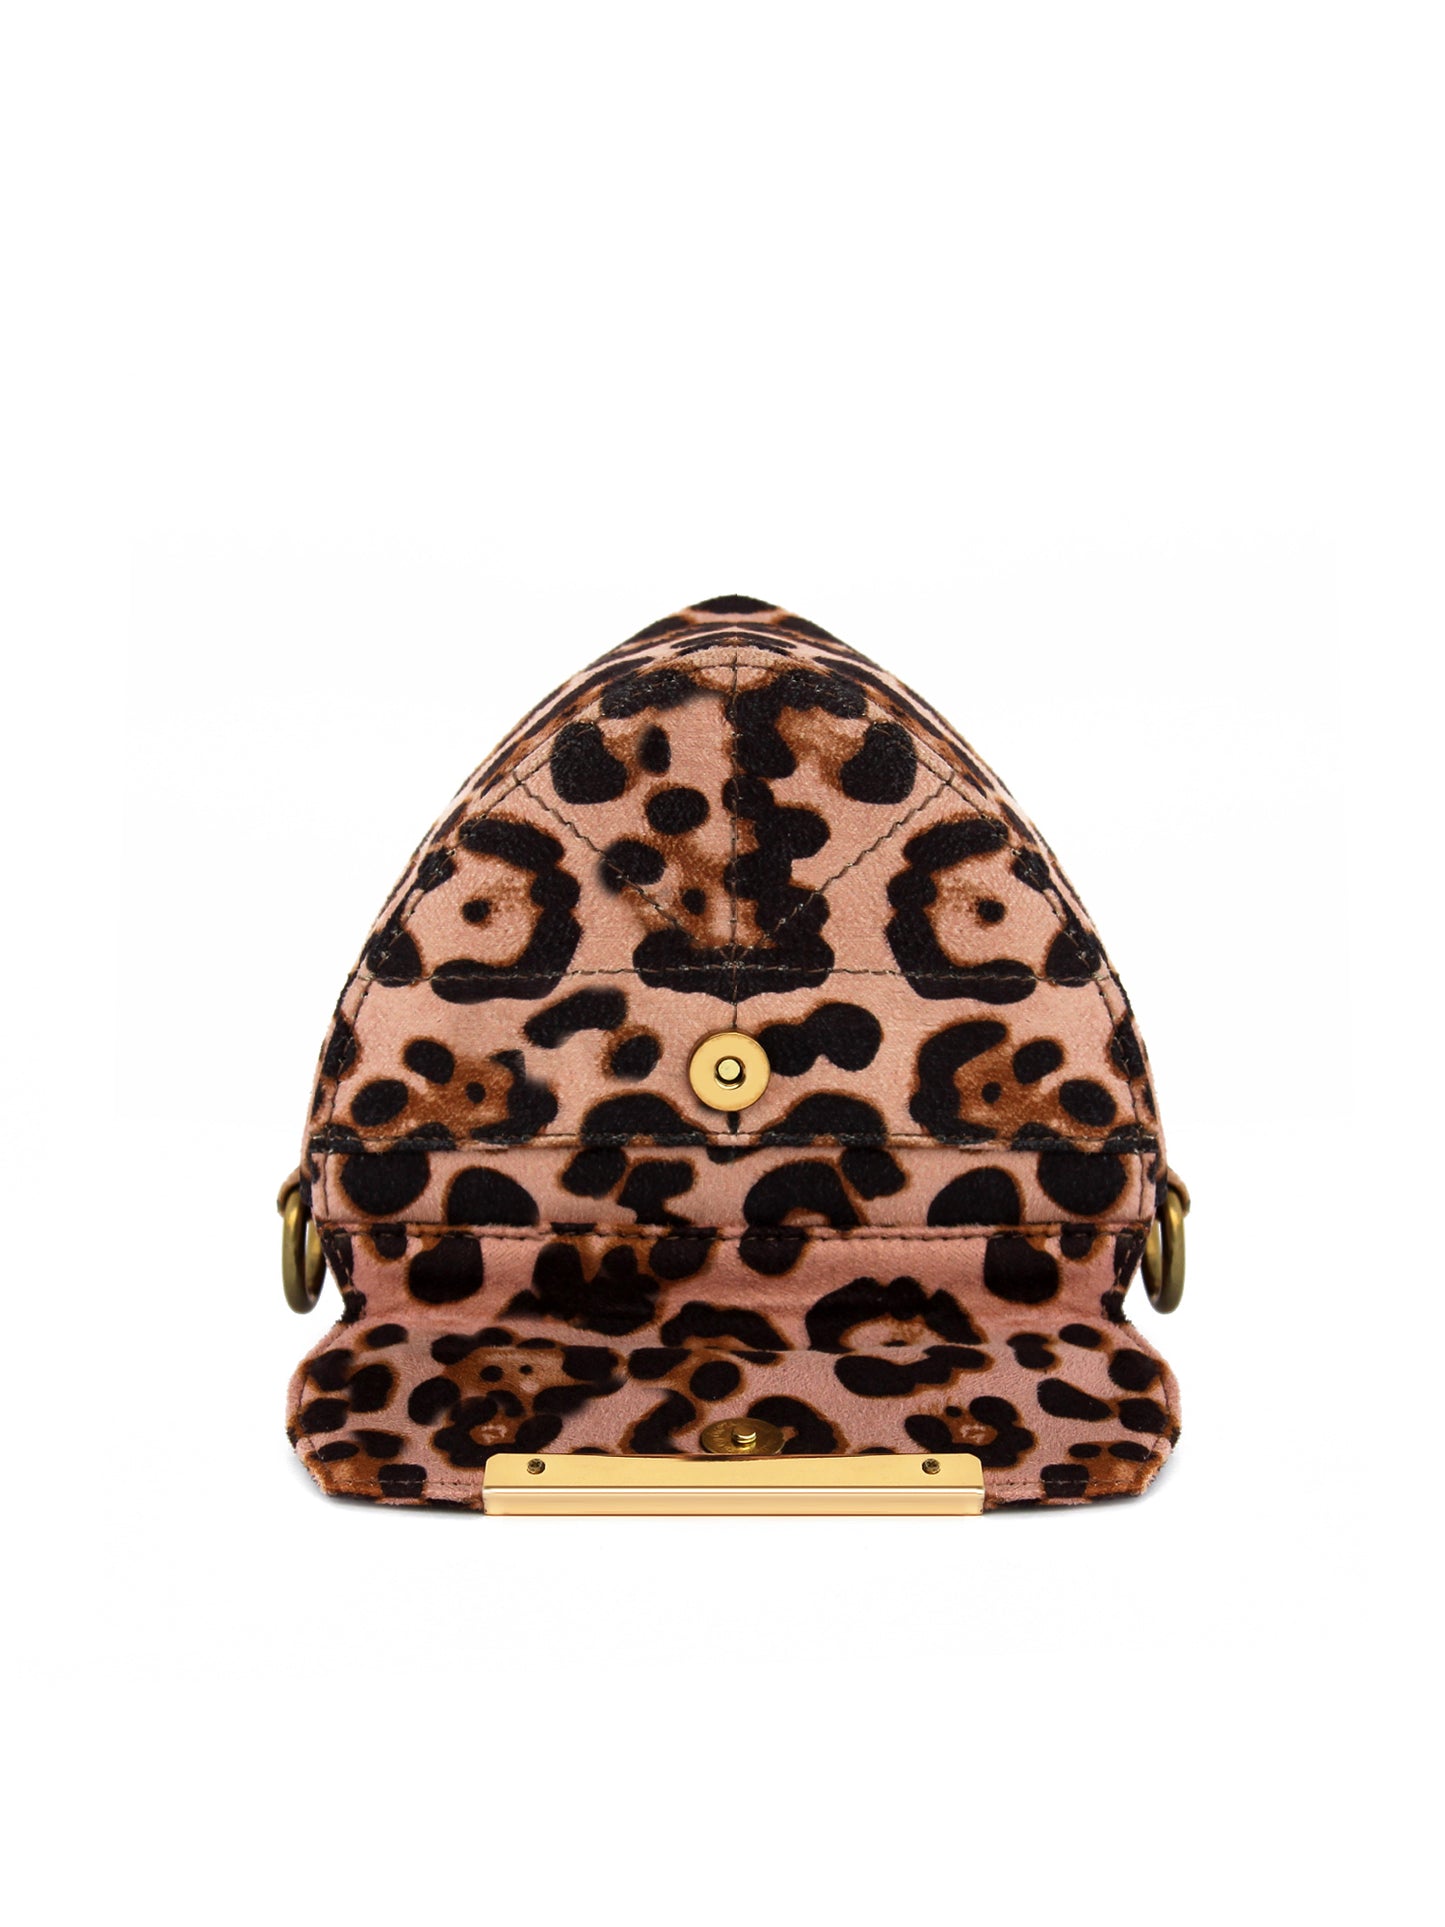 Lovestruck Heart Shaped Cheetah Mini Bag